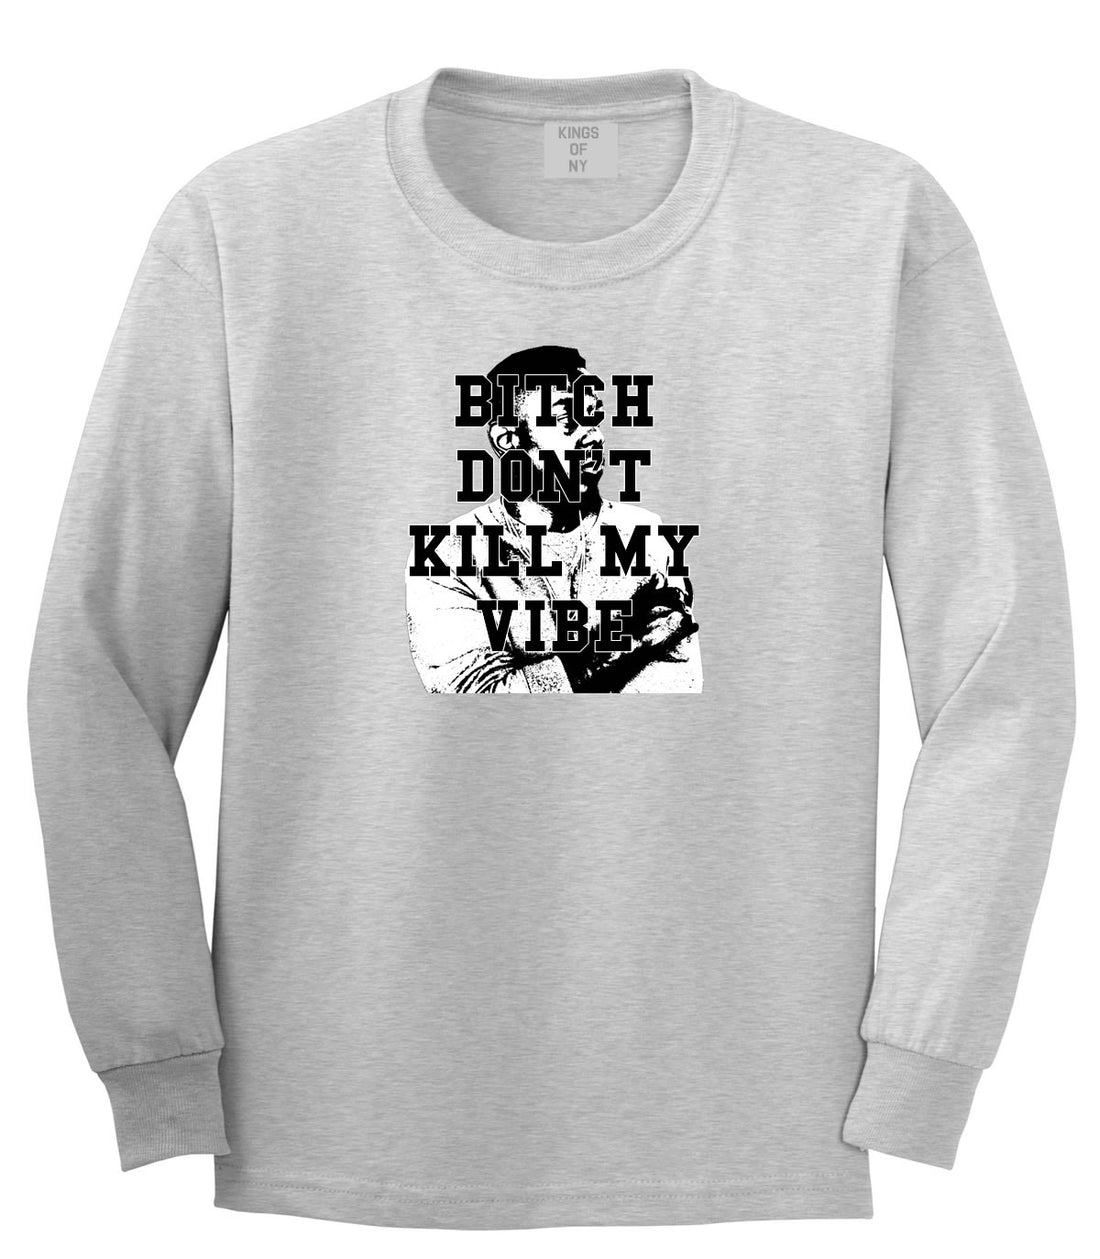 Bitch Dont Kill My Vibe Kendrick Long Sleeve T-Shirt In Grey by Kings Of NY